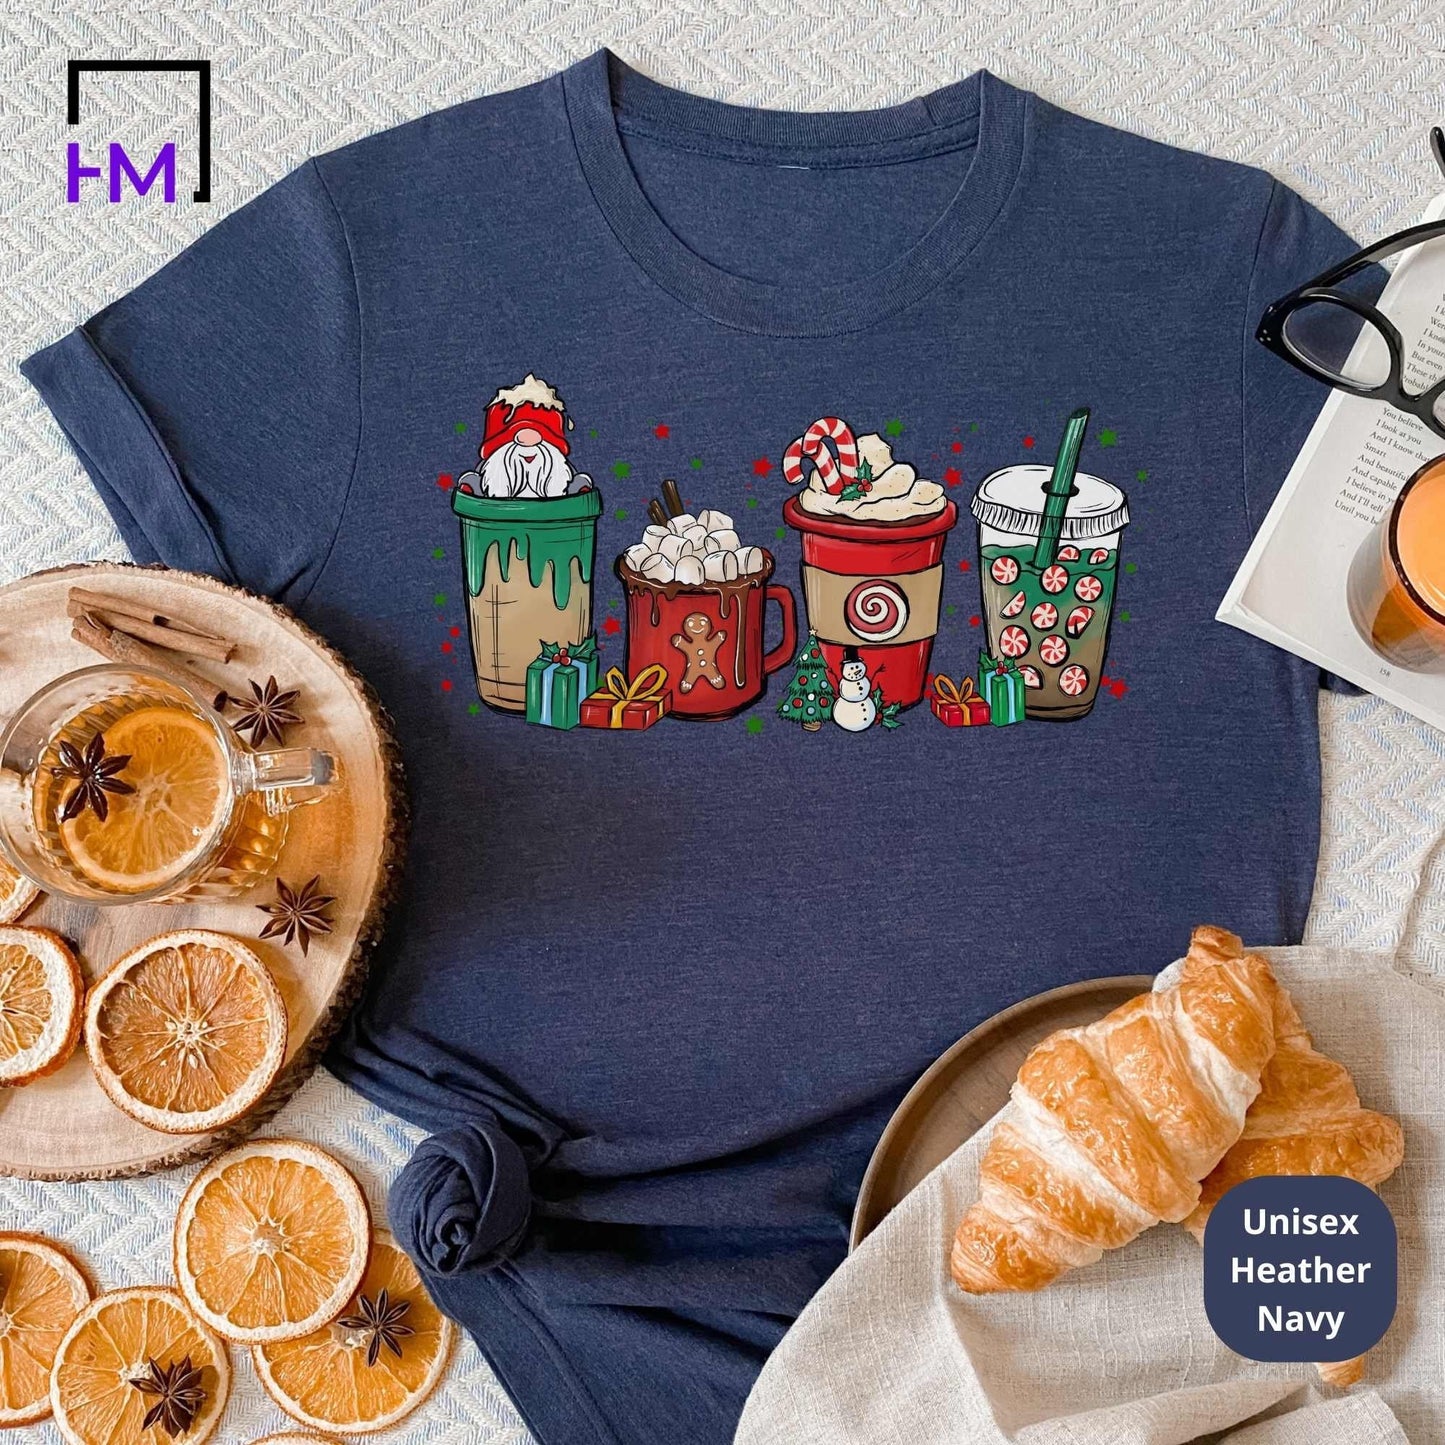 Christmas Coffee Sweatshirt | Warm Cozy Fall Crewneck Sweater for Pumpkin Spice, Peppermint Latte Lovers, Avail in TShirt, Hoodie, Plus Size HMDesignStudioUS